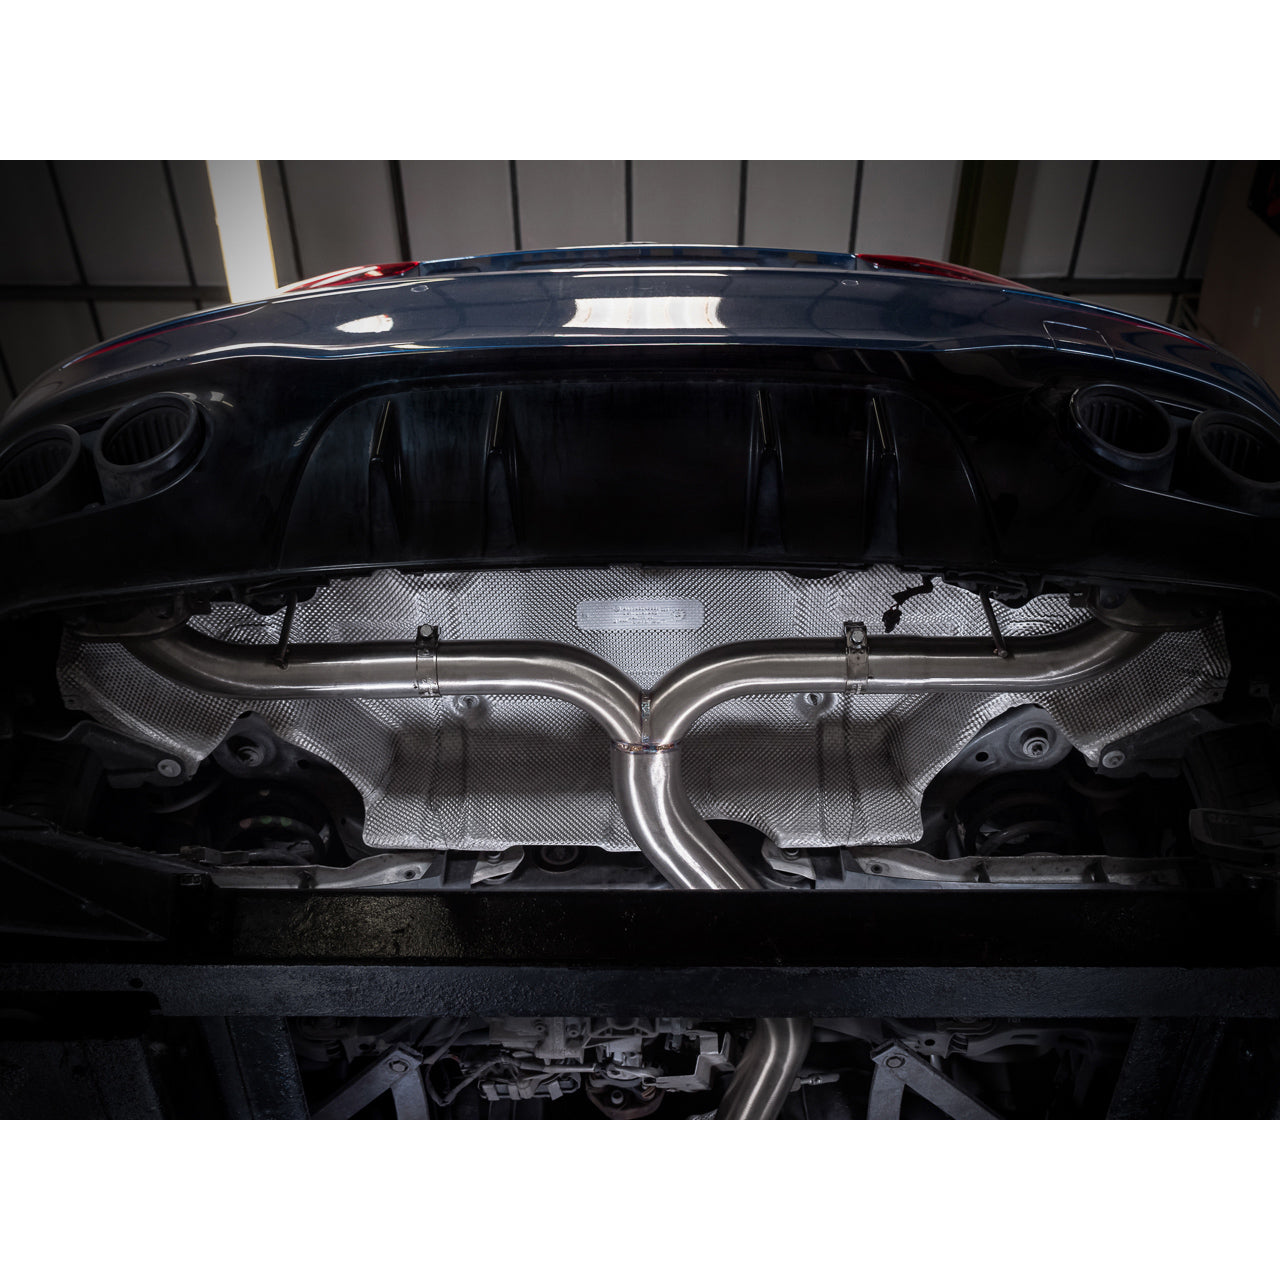 Cobra Venom Cat Back Rear Box Delete Performance Exhaust - Mercedes A45 S AMG